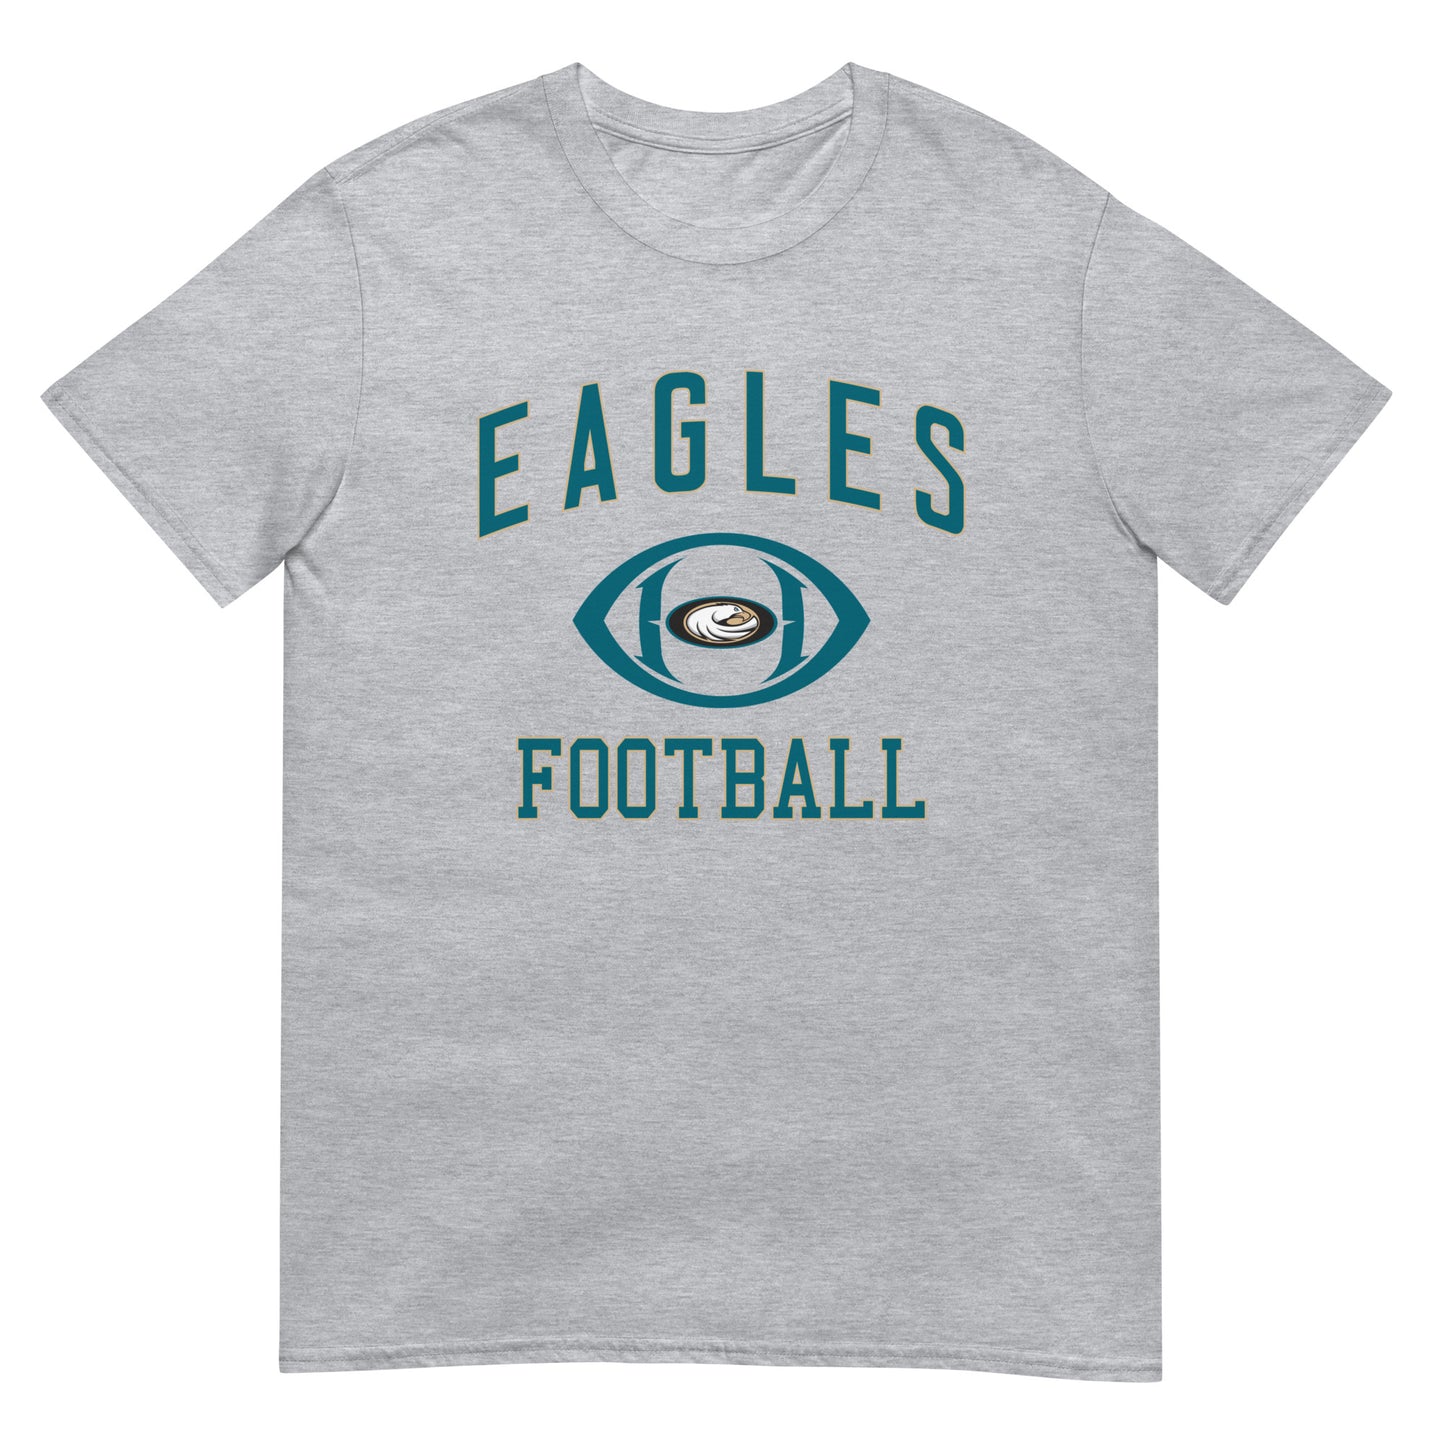 Eagles Football Short-Sleeve Unisex T-Shirt